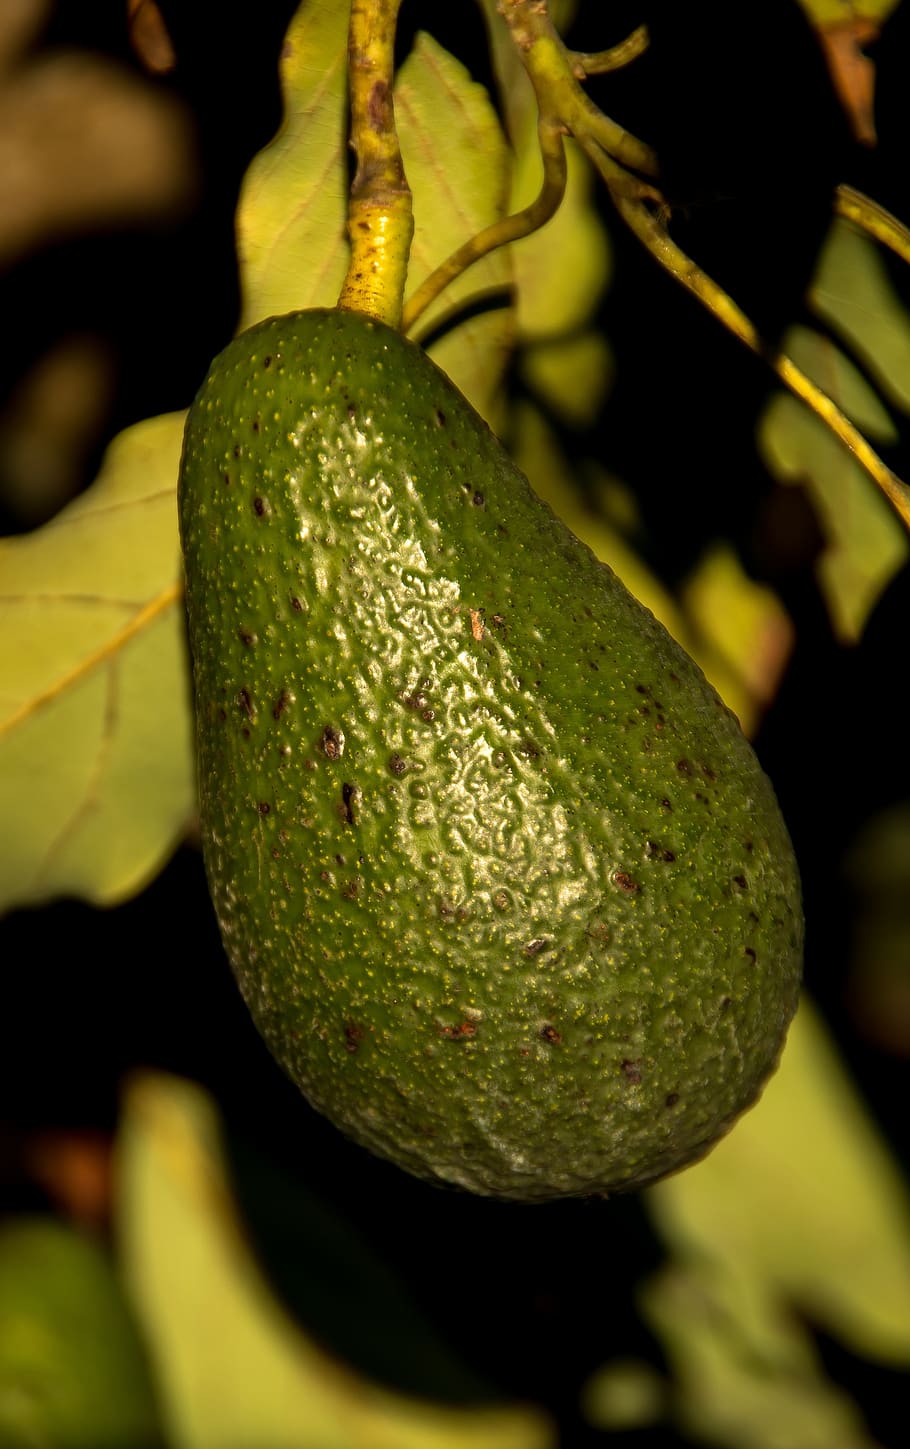 wurtz avocado, tree, shiny, health, fruit, green, growing, food and drink